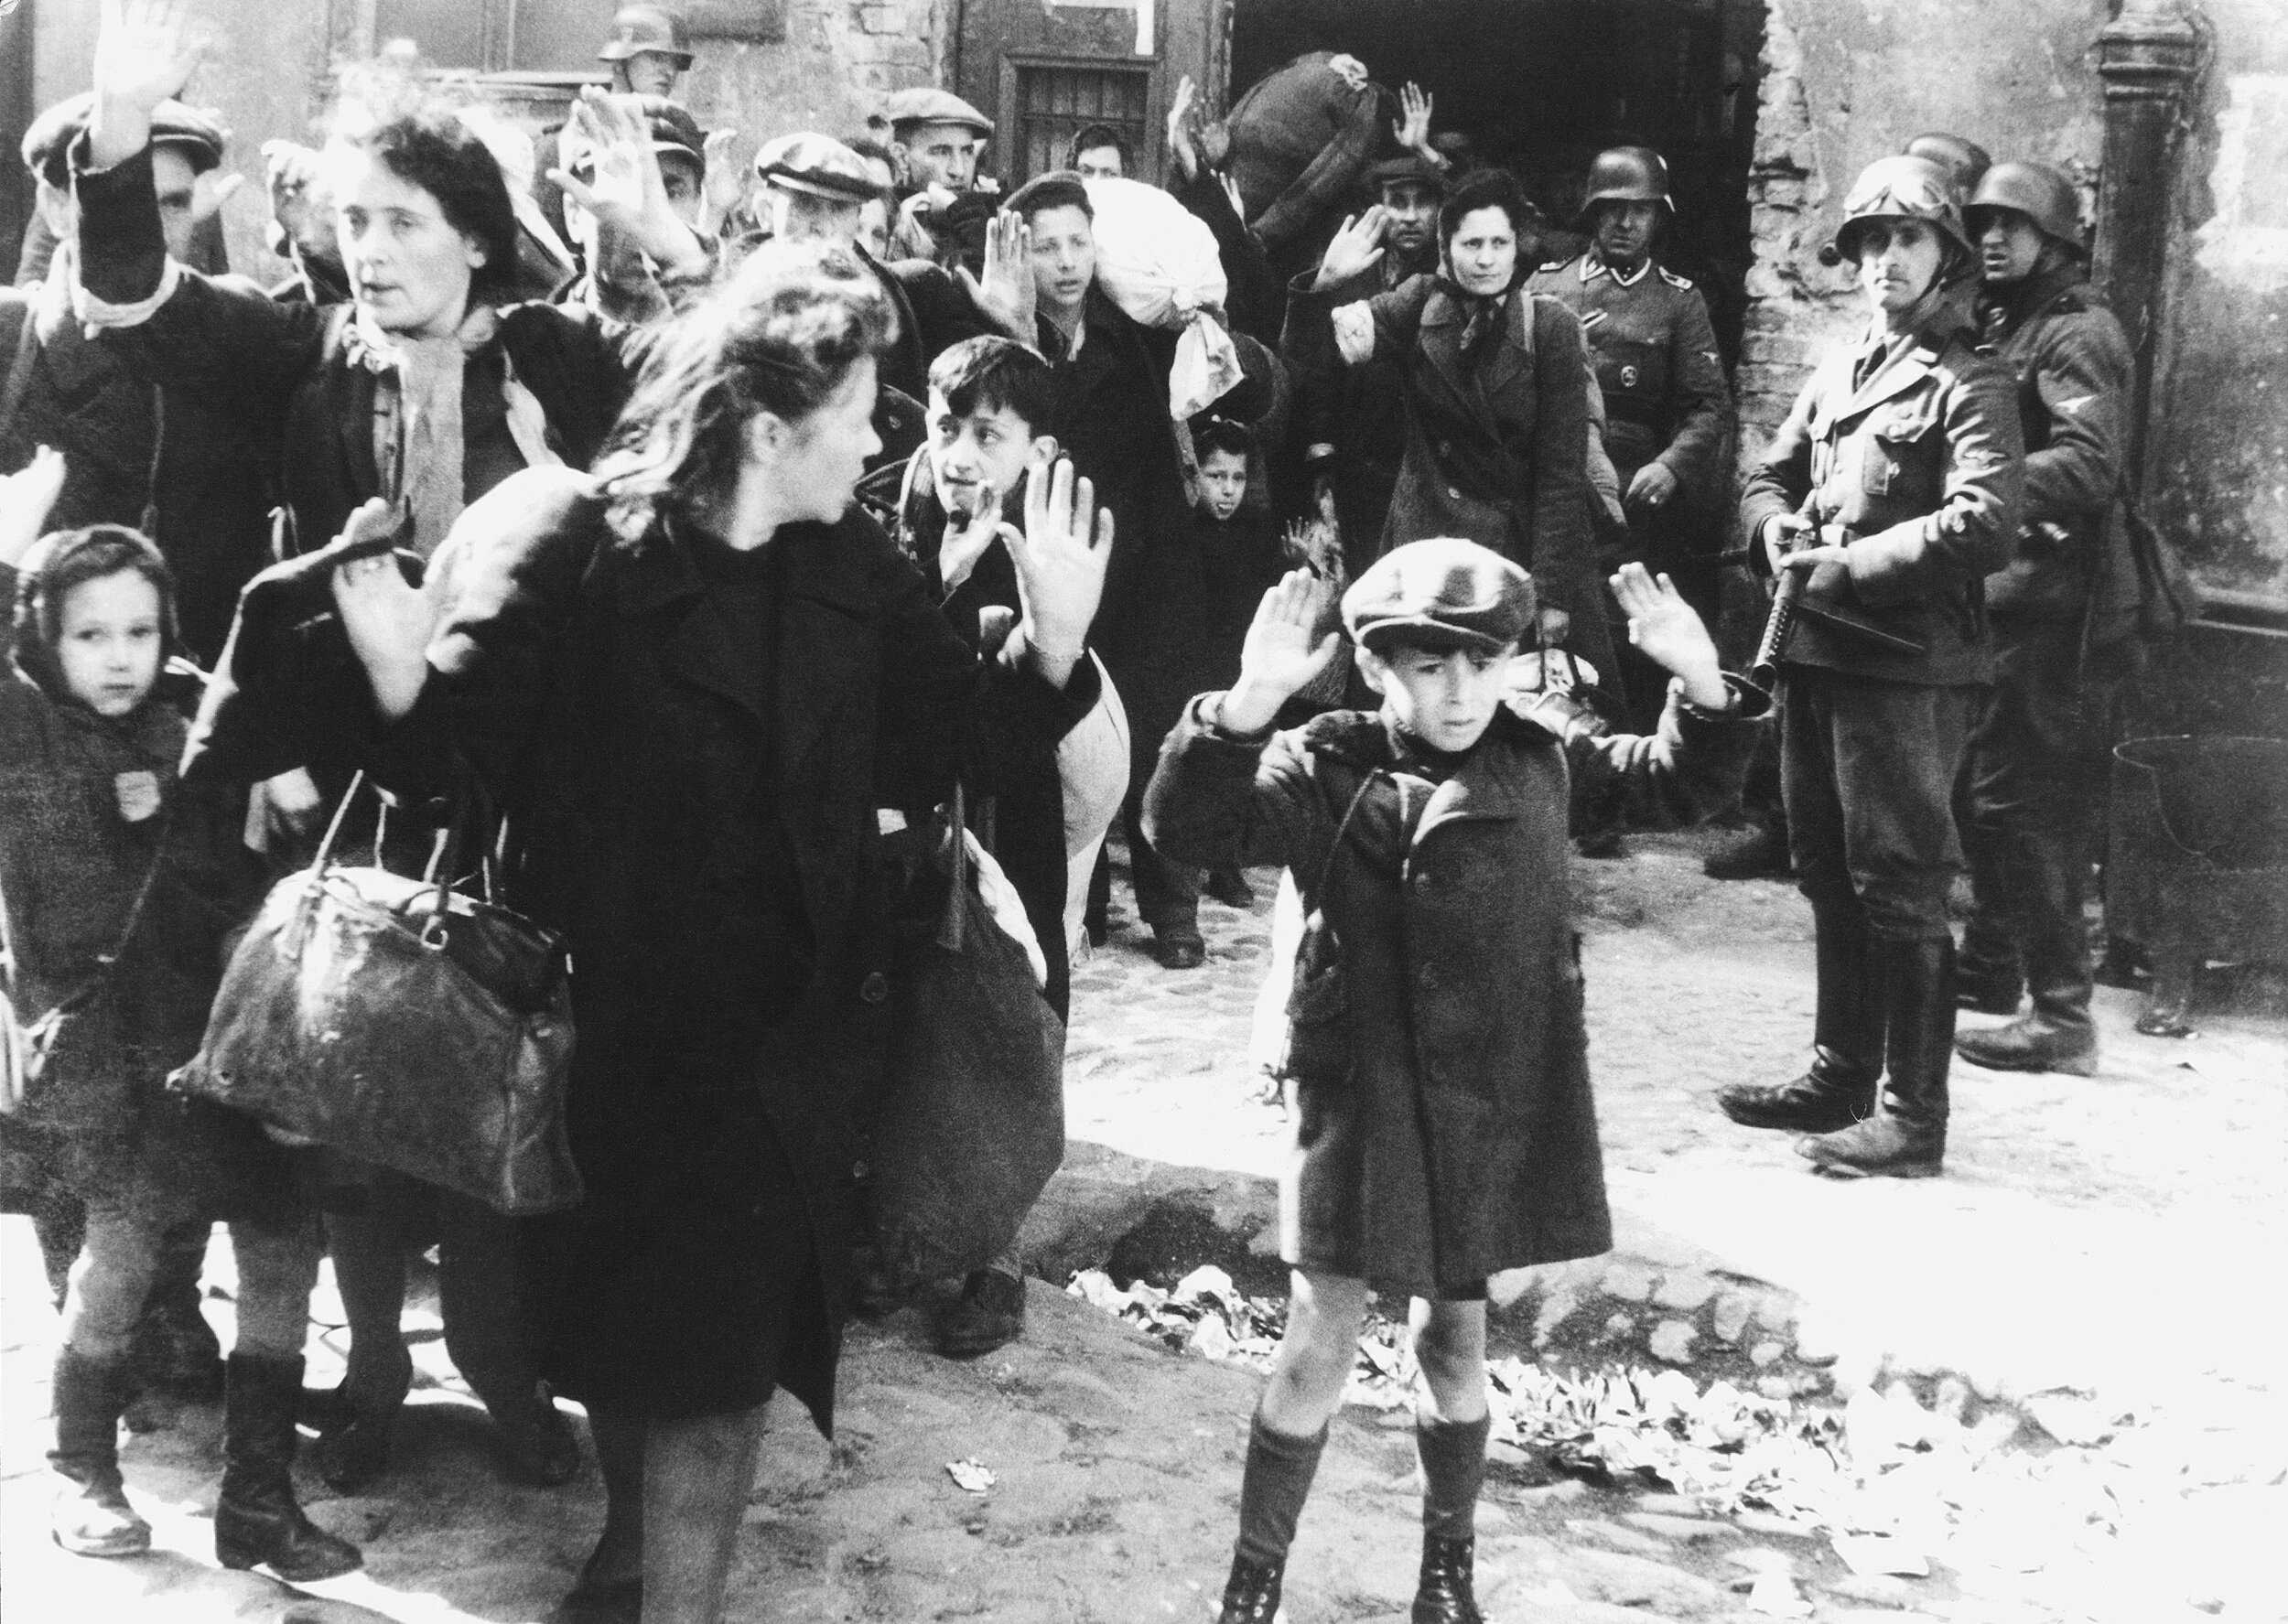 Stroop_Report_-_Warsaw_Ghetto_Uprising_BW.jpg